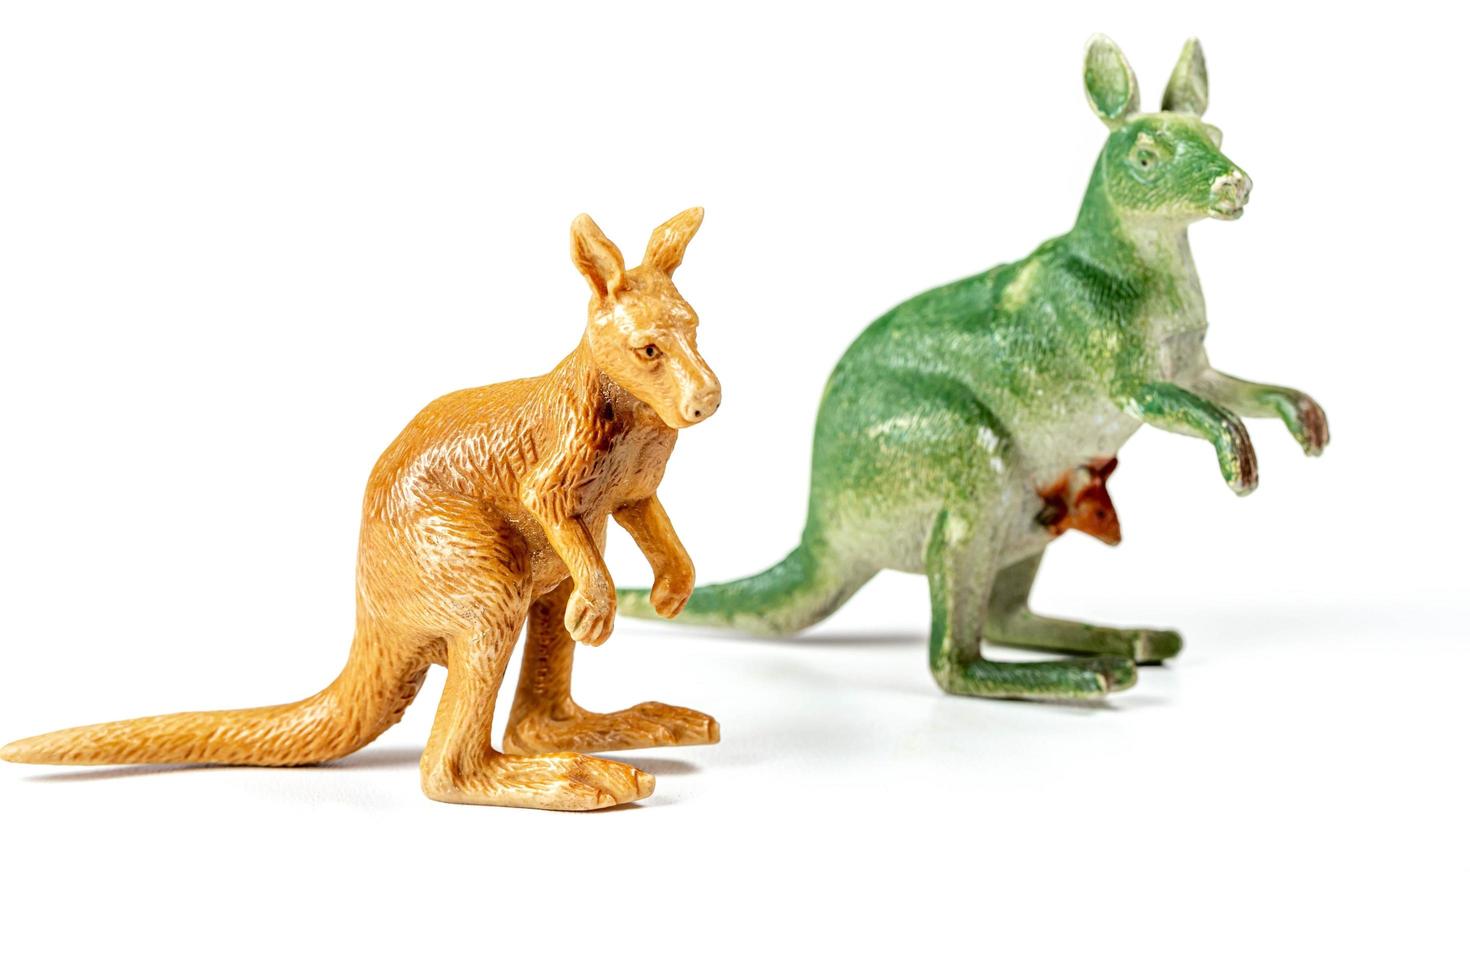 grüne und braune Känguru-Plastikfiguren foto